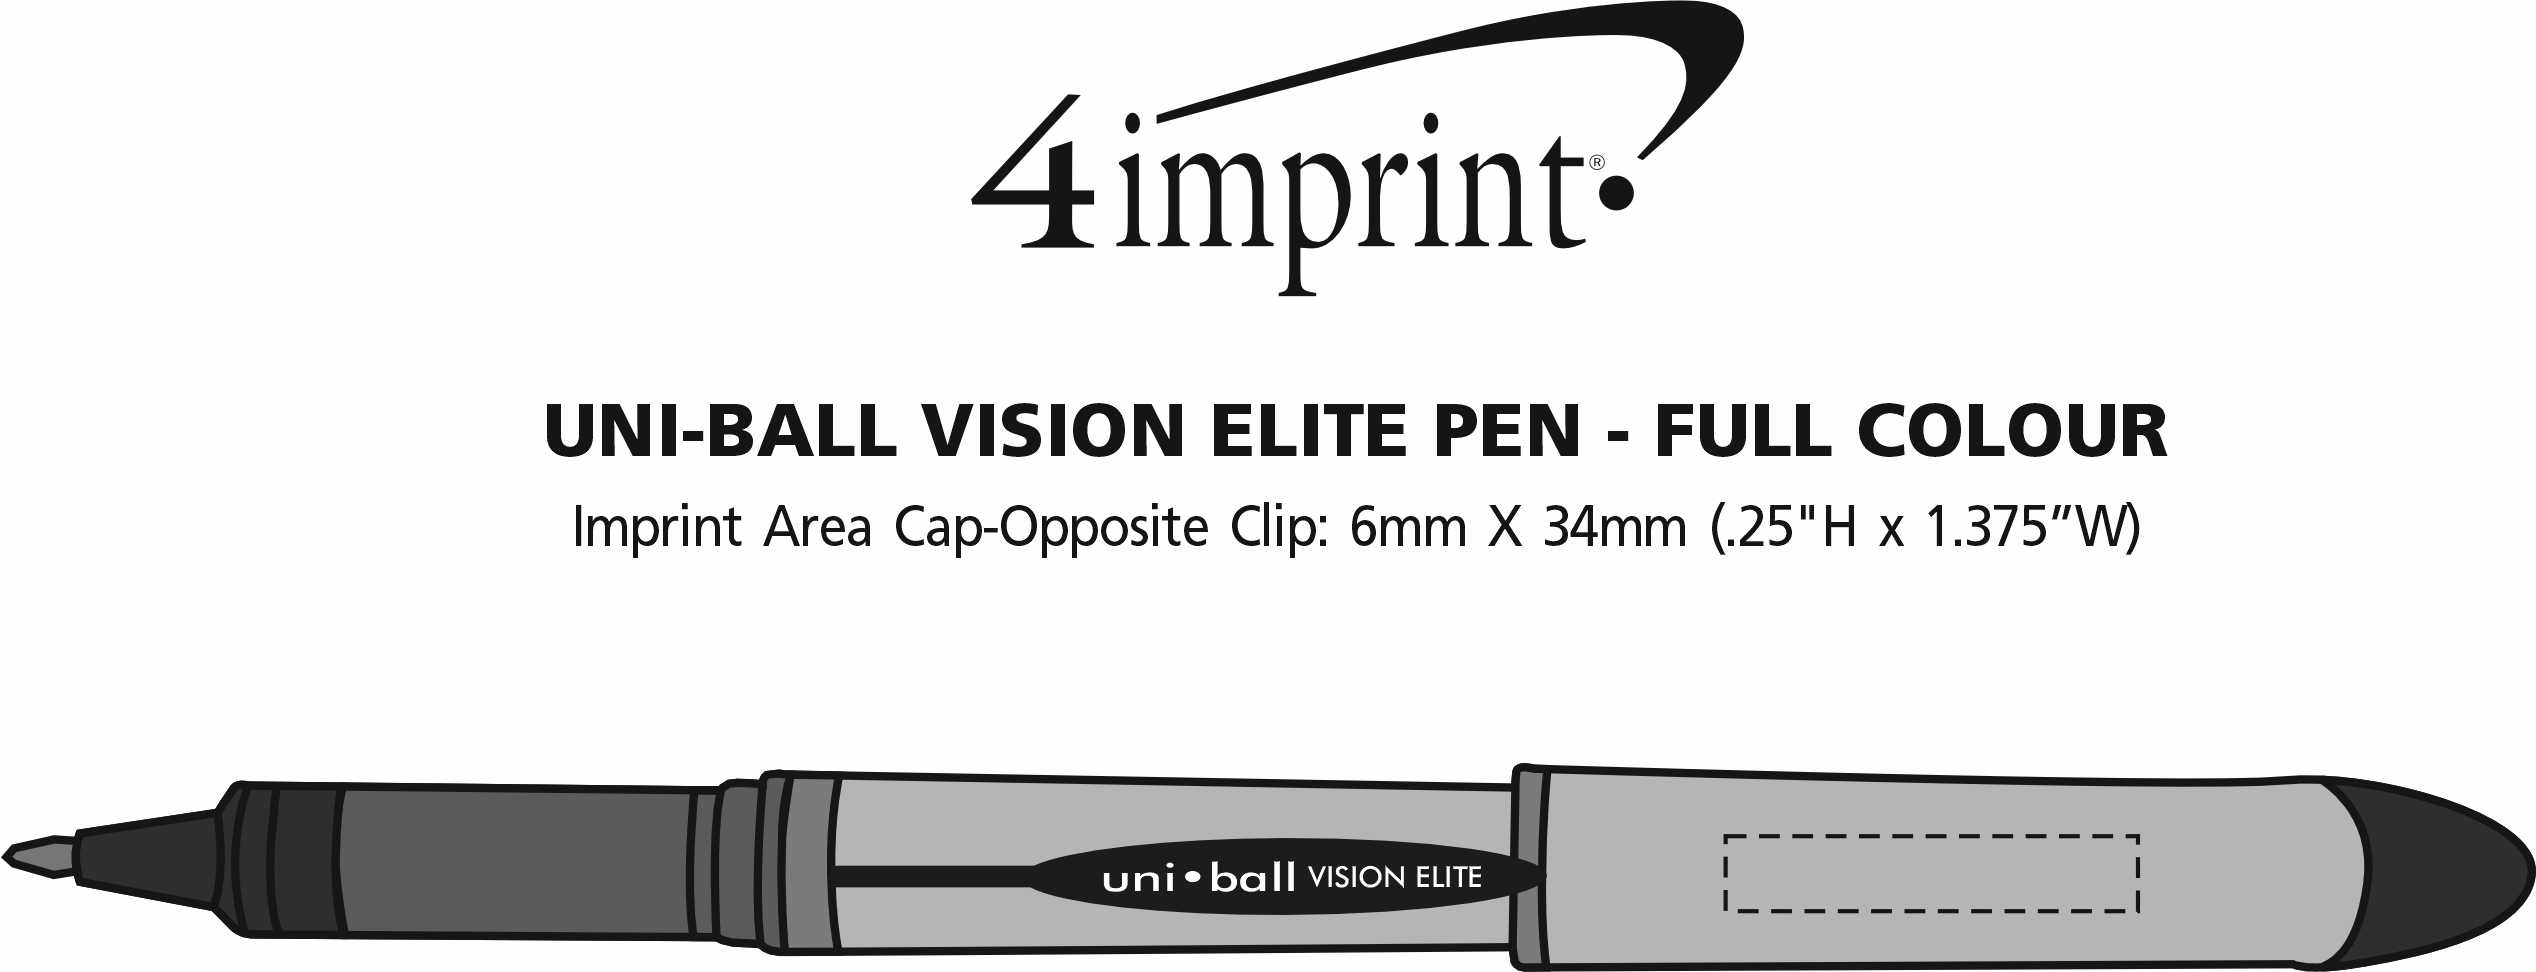 Imprint Area of uni-ball Vision Elite Pen - Full Colour